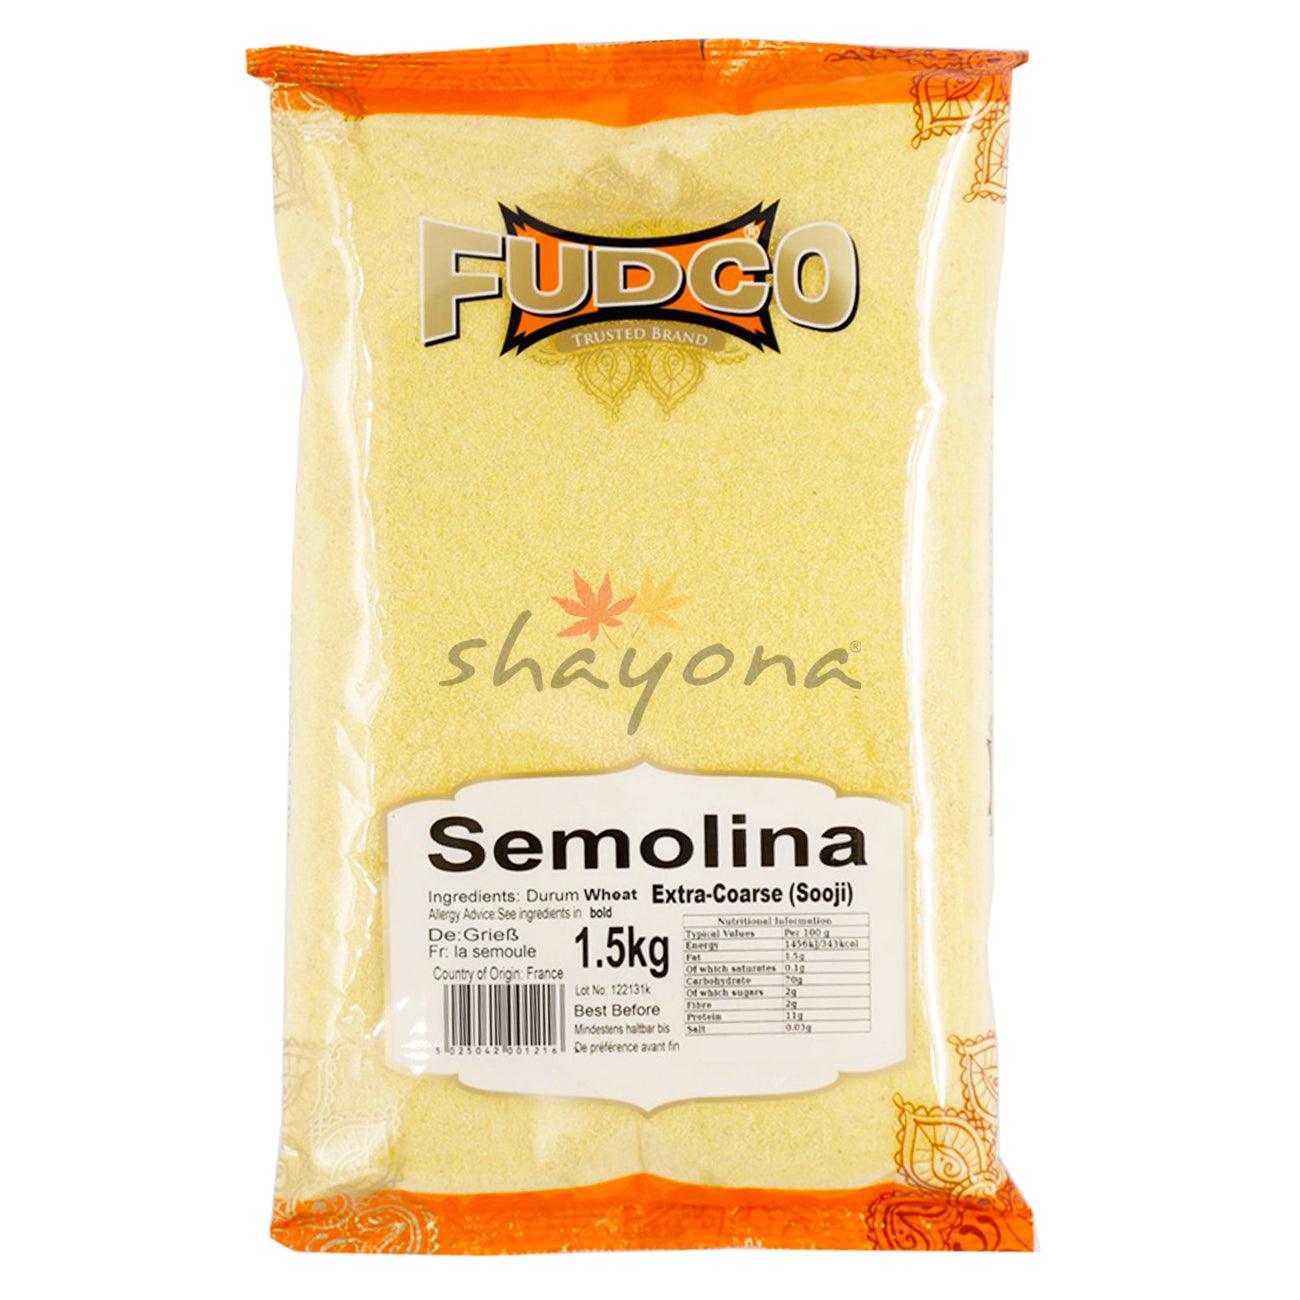 Fudco Semolina - Shayona UK